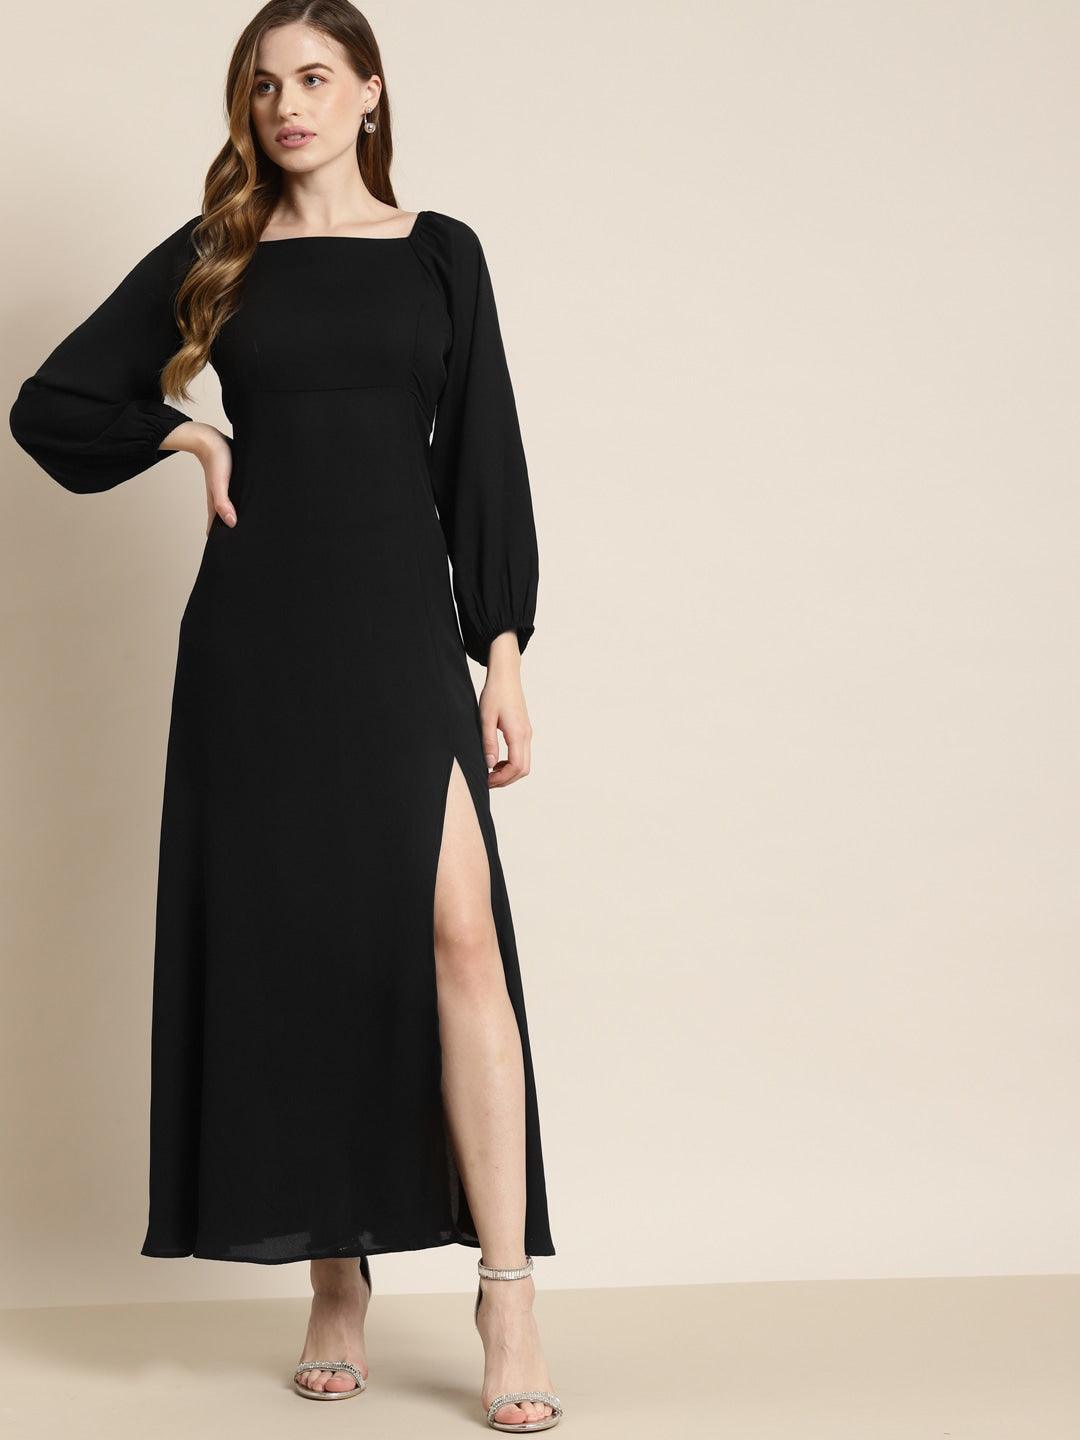 Qurvii Black Solid Maxi Dress with Slit Detail - Qurvii India